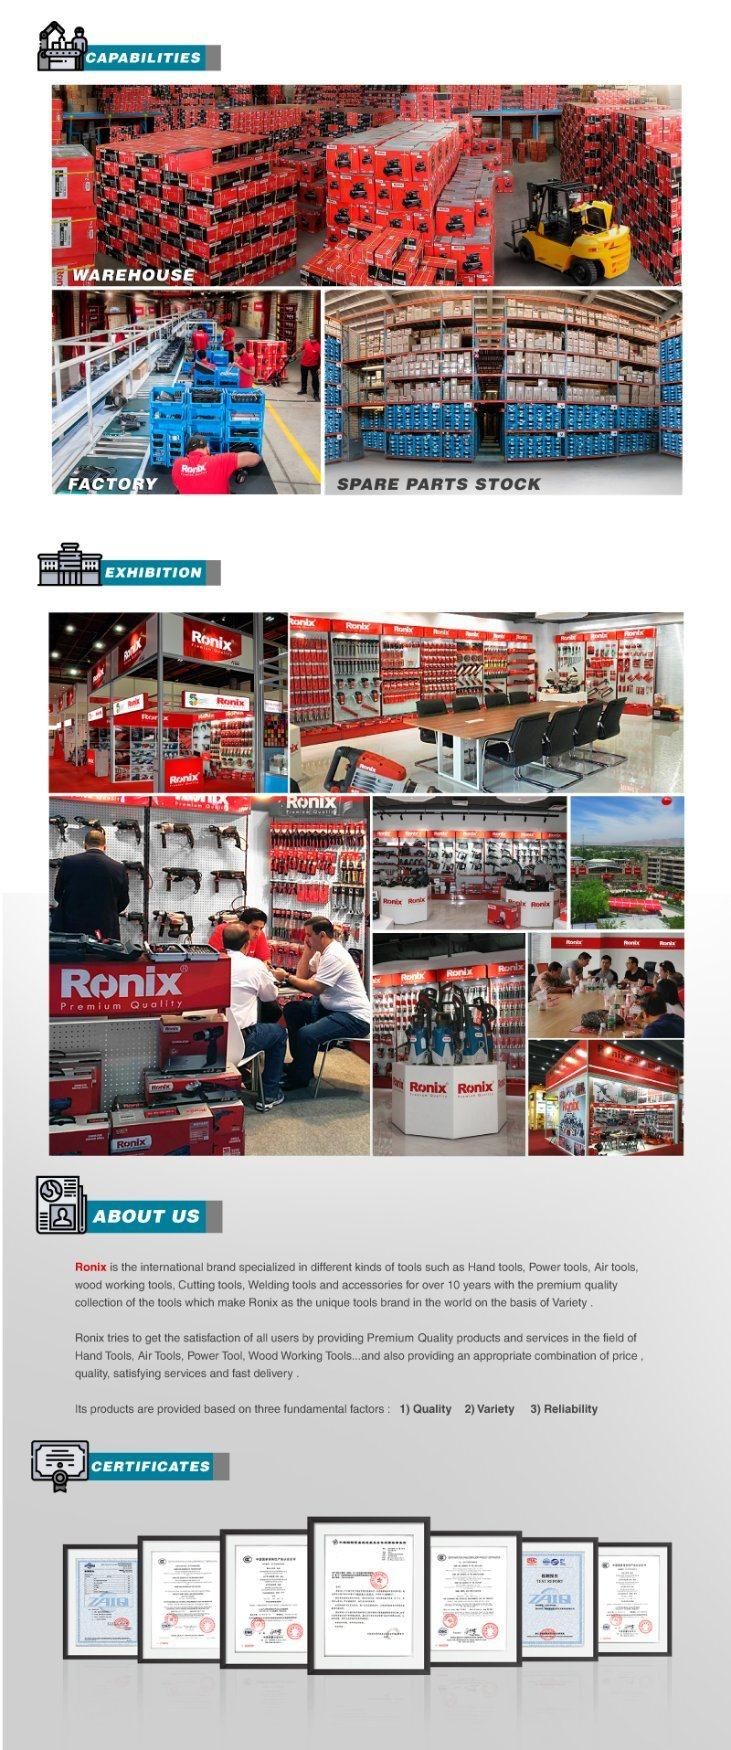 Ronix Hand Tools Model Rh-2020 Different Sizes 1.5-8mm 8PCS Folding Hex Key Wrench Set